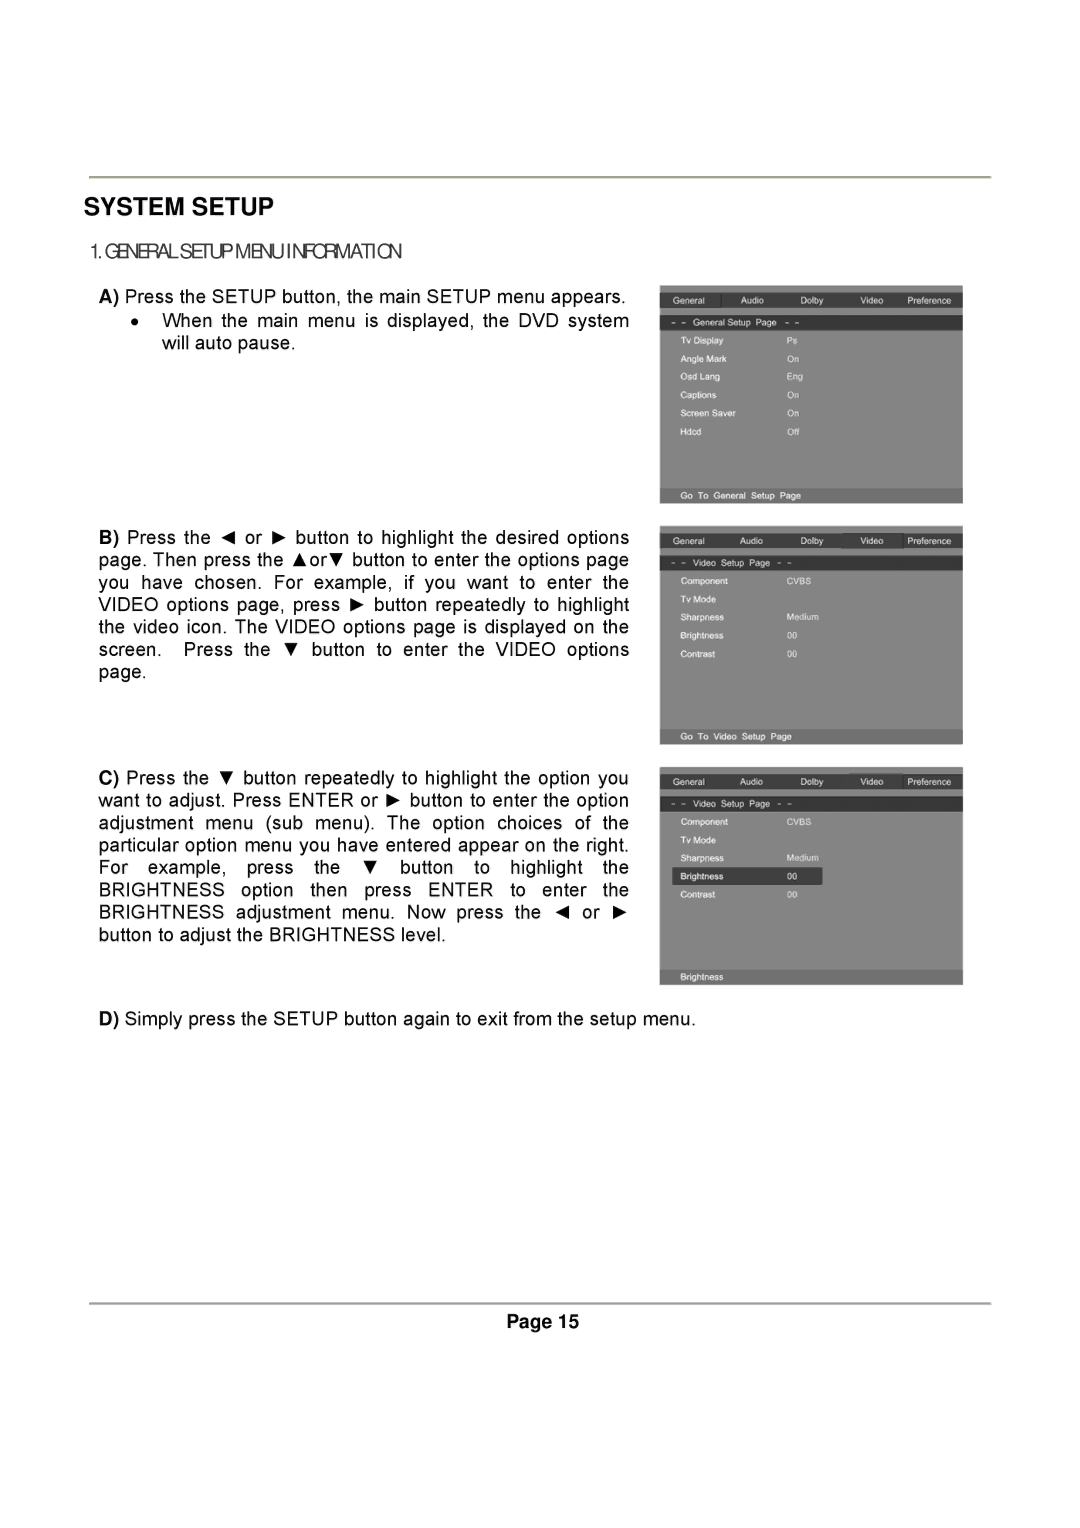 Magnasonic DVD830 instruction manual System Setup, General Setup Menu Information 